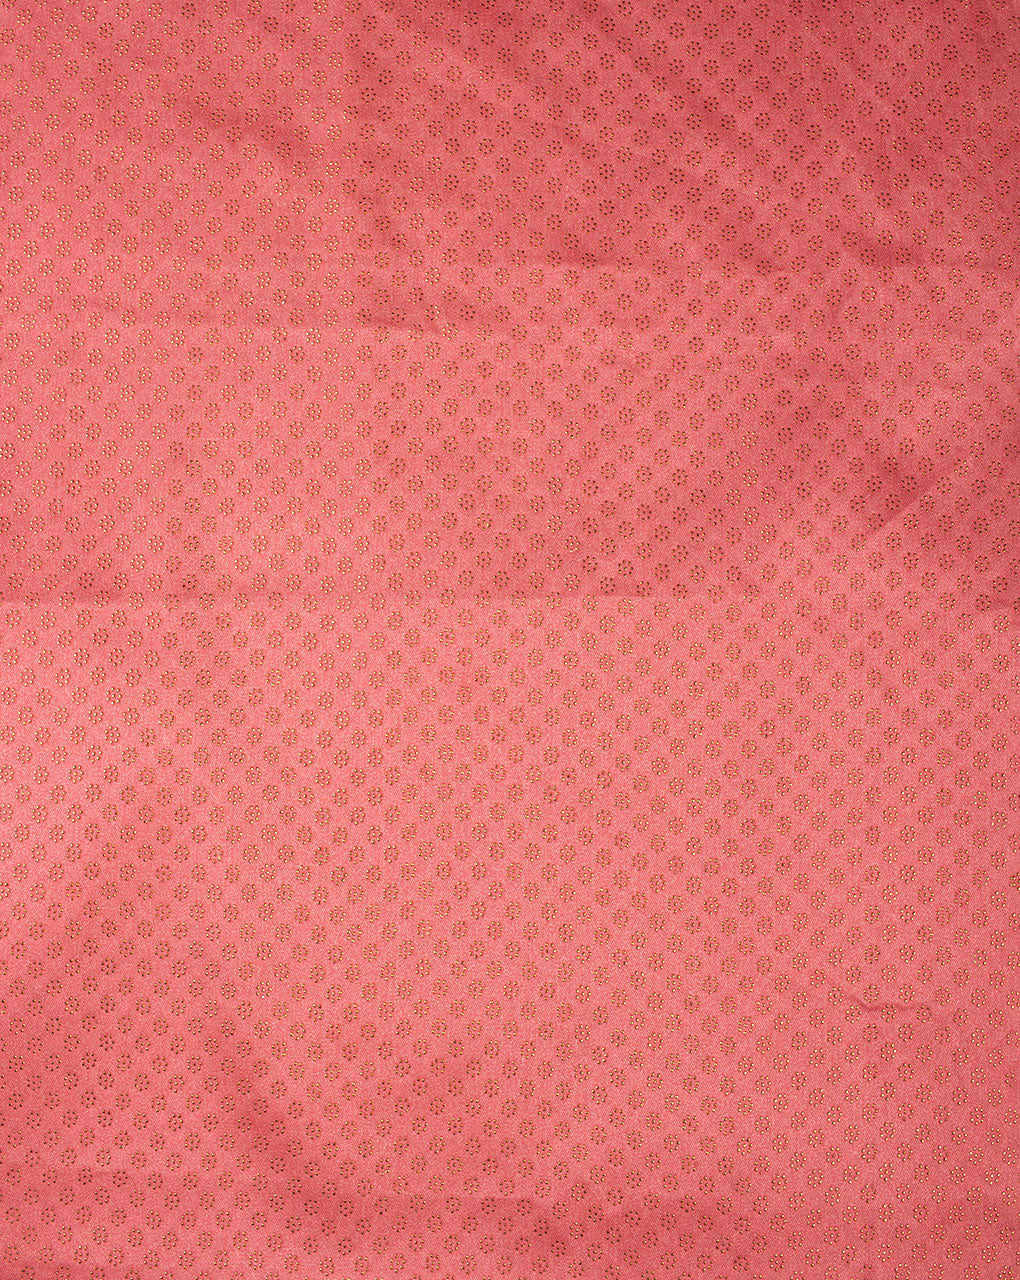 Foil Screen Print Polyester Fabric - Fabriclore.com